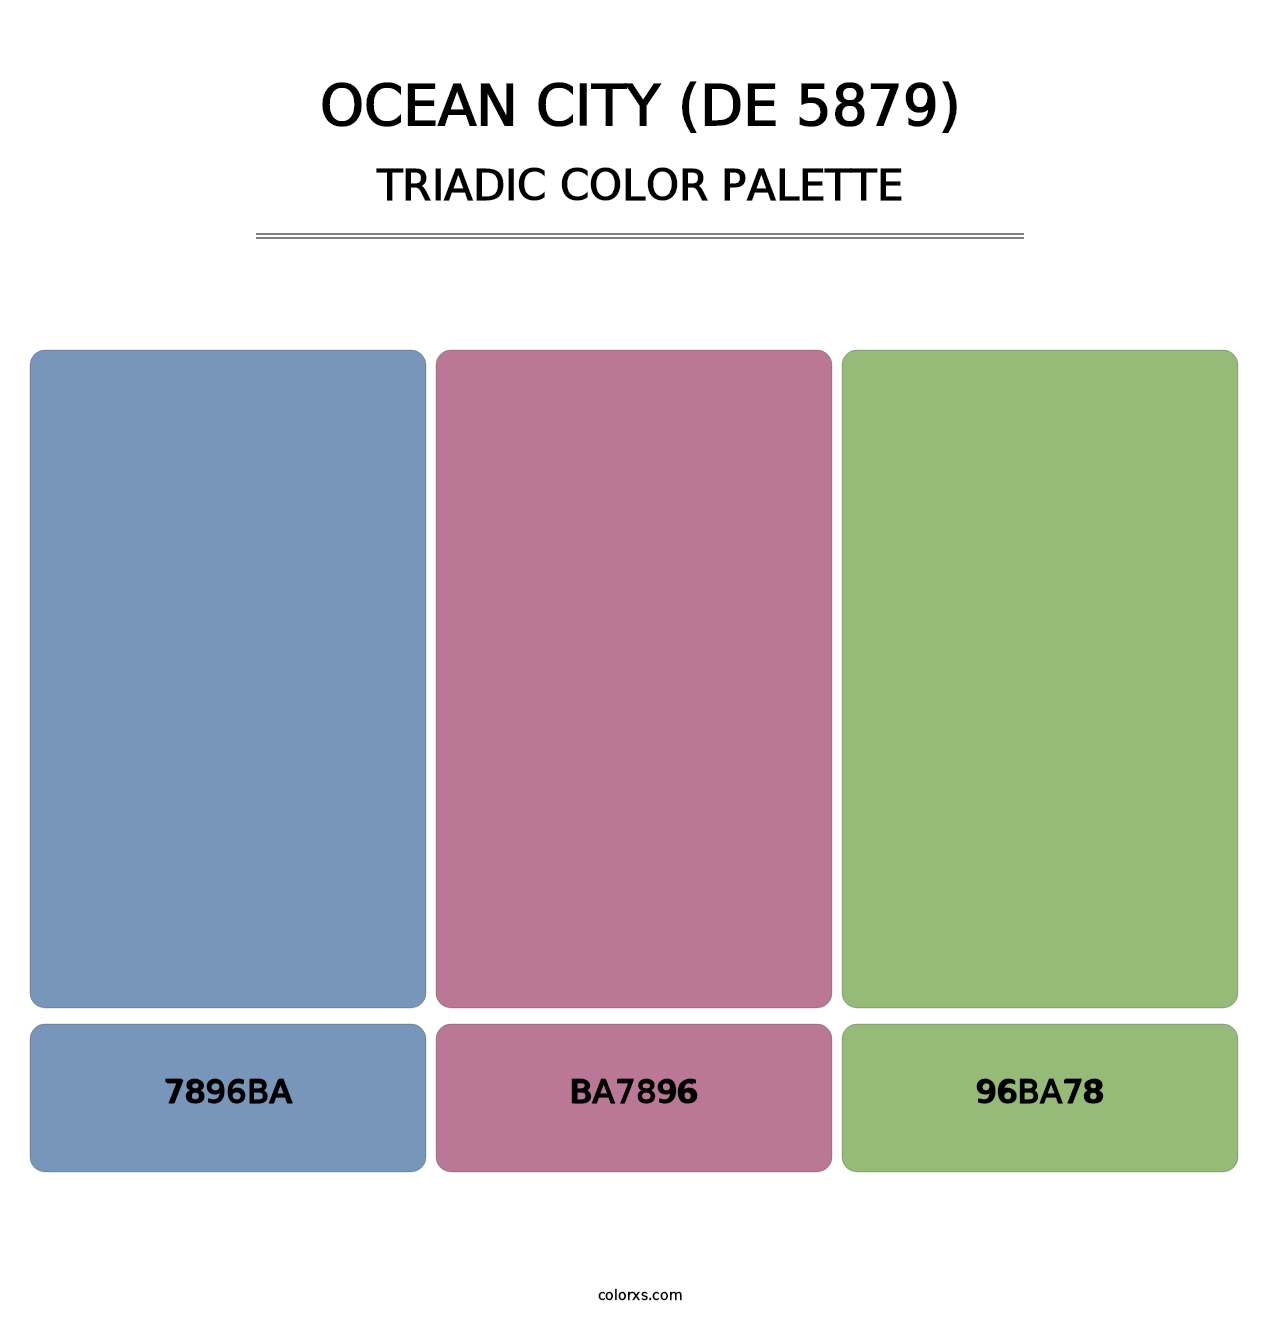 Ocean City (DE 5879) - Triadic Color Palette